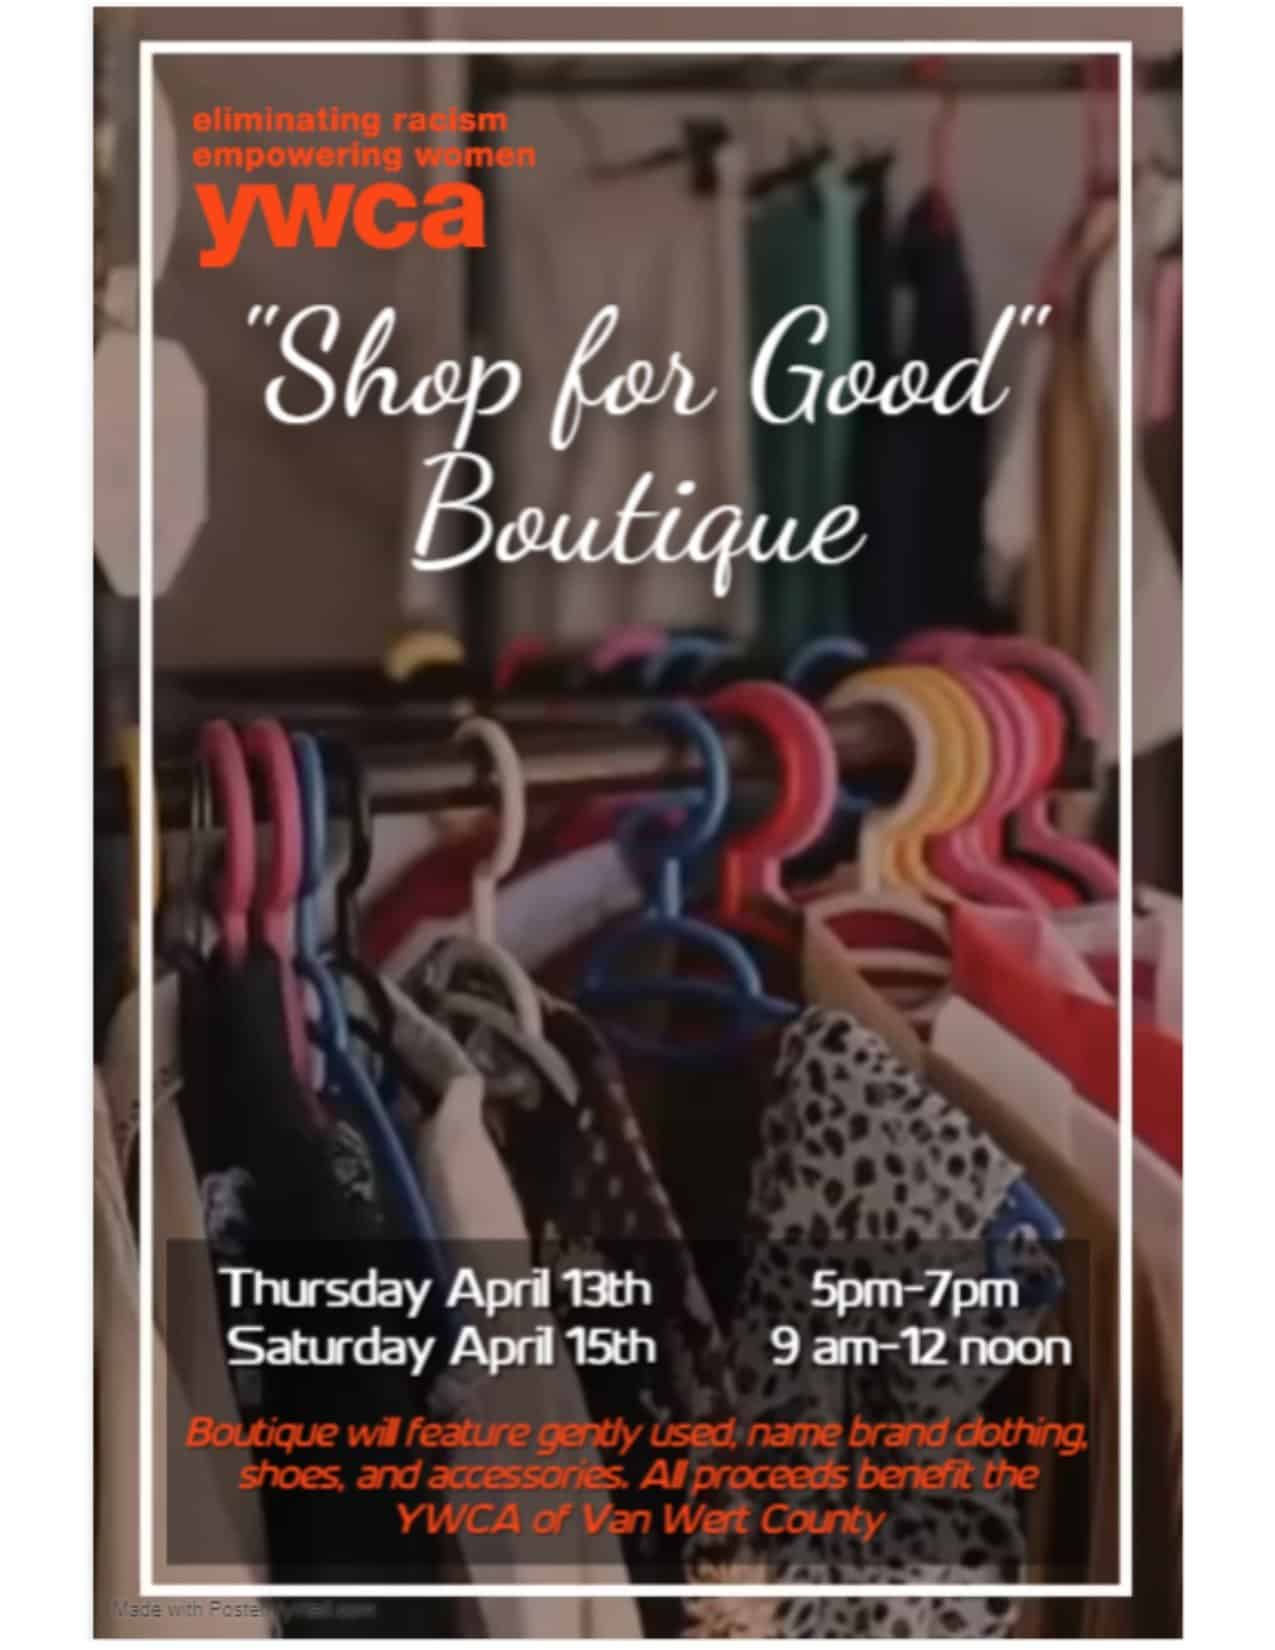 YWCA Shop for Good Boutique